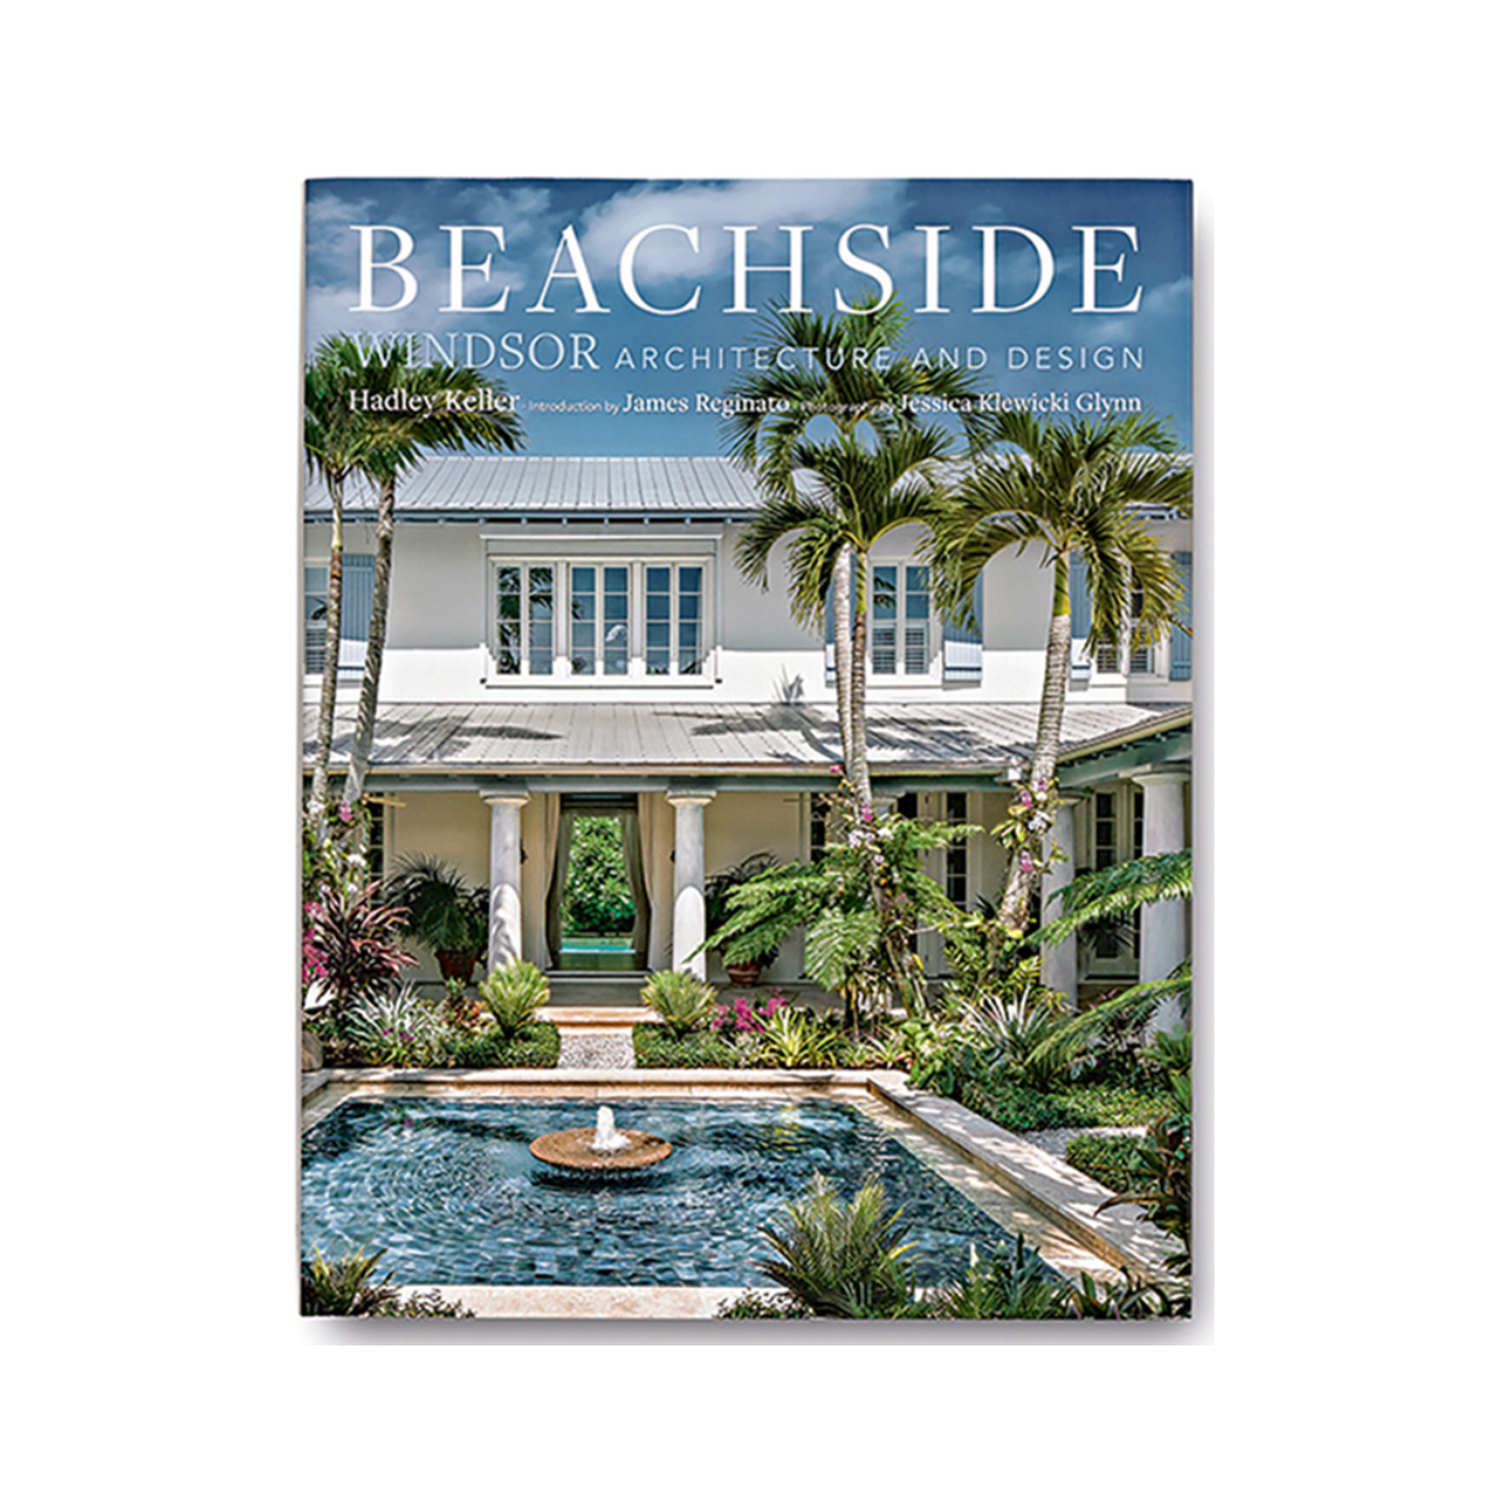 Beachside Windsor Architecture and Design Book